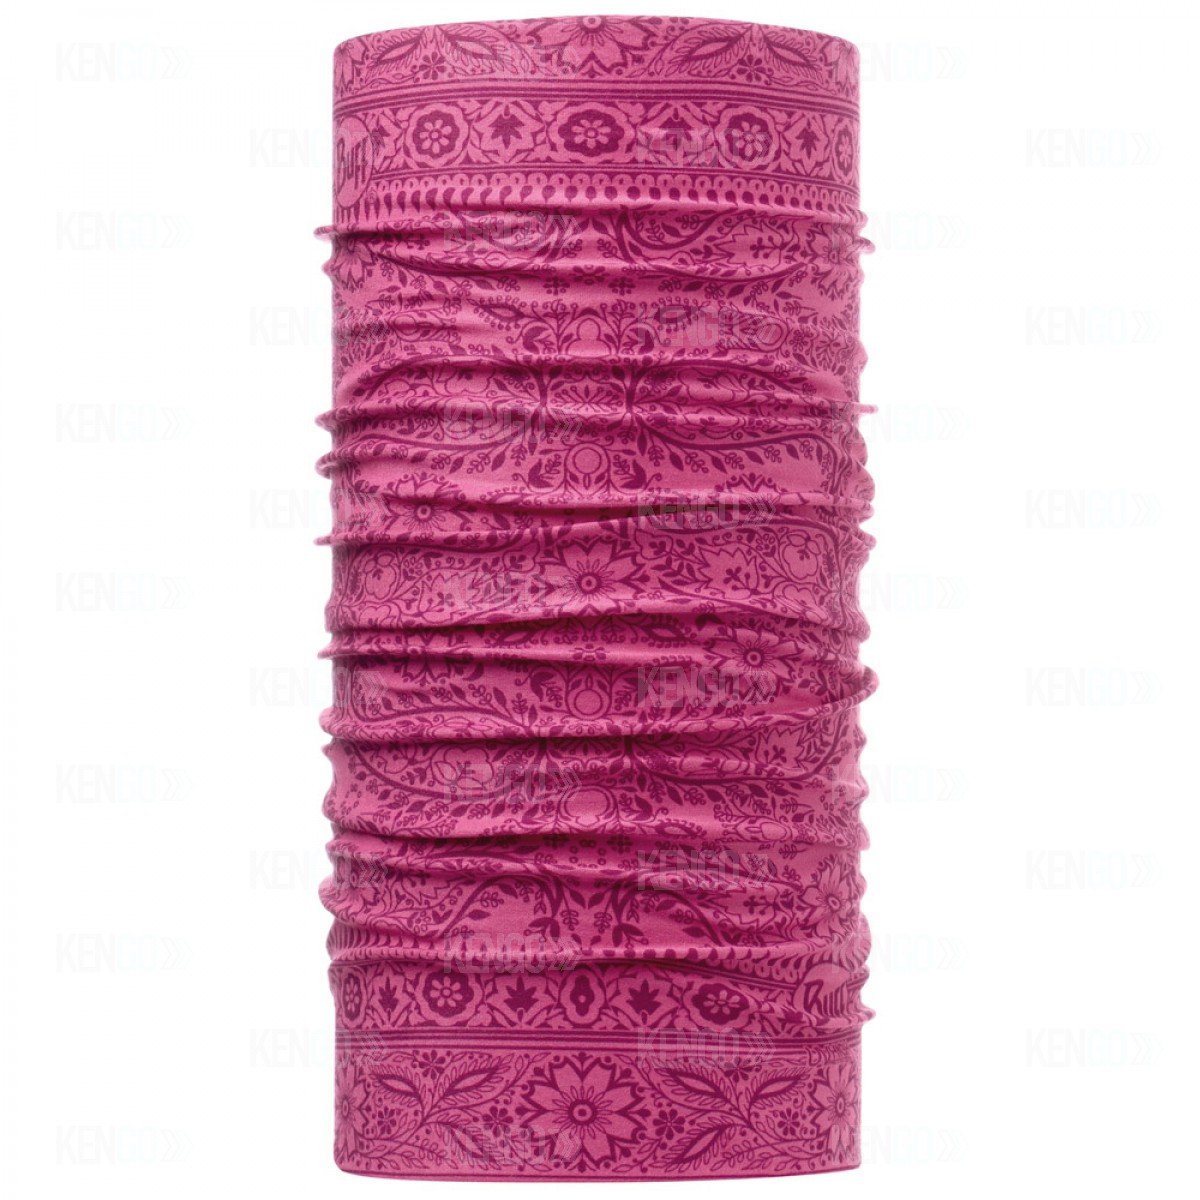 Велобандана BUFF Active HIGH UV BUFF KASPERLI, см: 53cm/62cm, розовая, 108588.00 вазочка для сухо ов с геометрическим рисунком розовая керамика 11х5 12 08055 202306 111 2